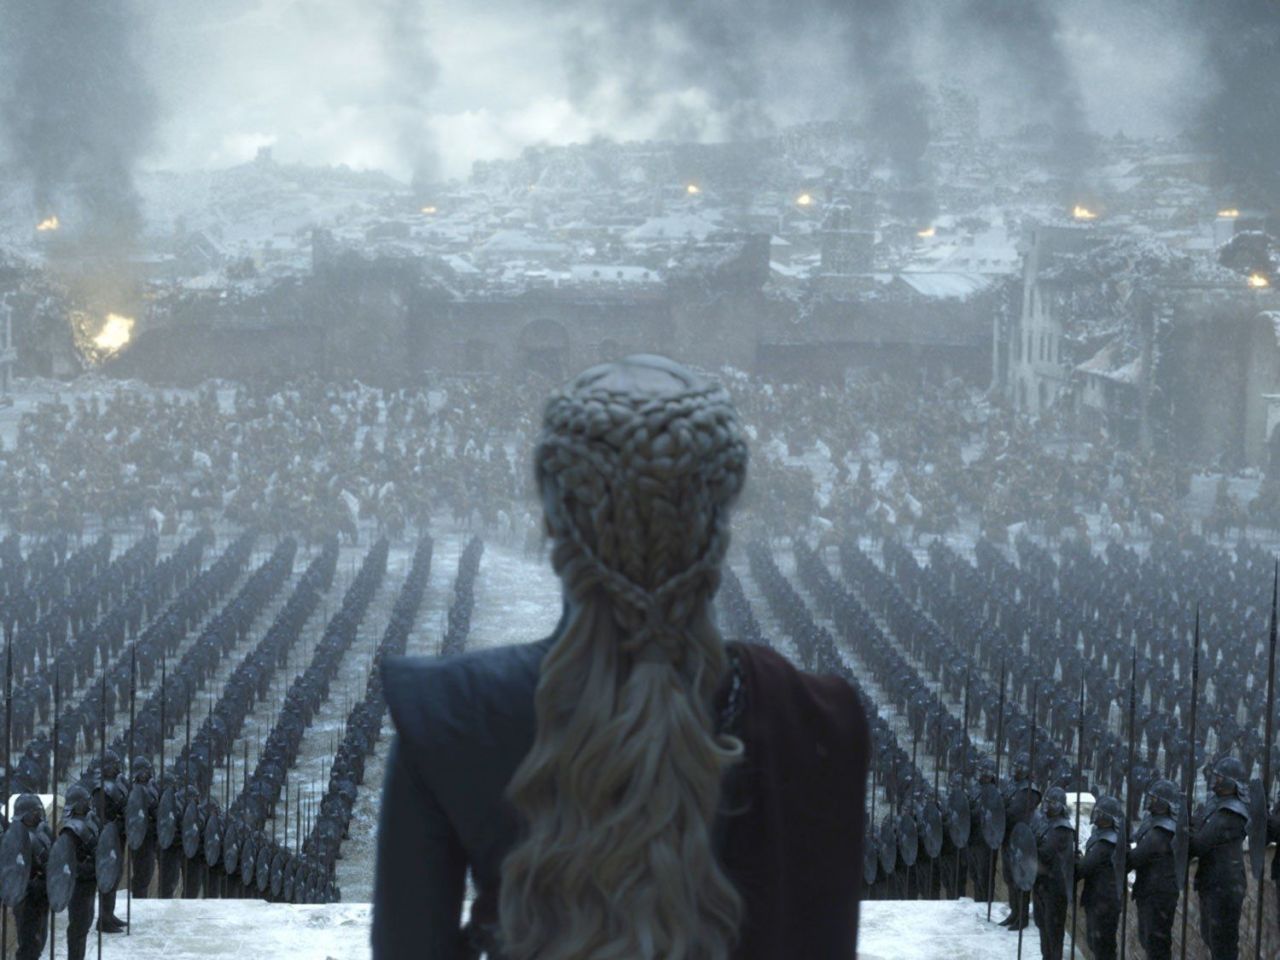 Game of Thrones : un absentéisme record de 40% prévu lundi matin au boulot